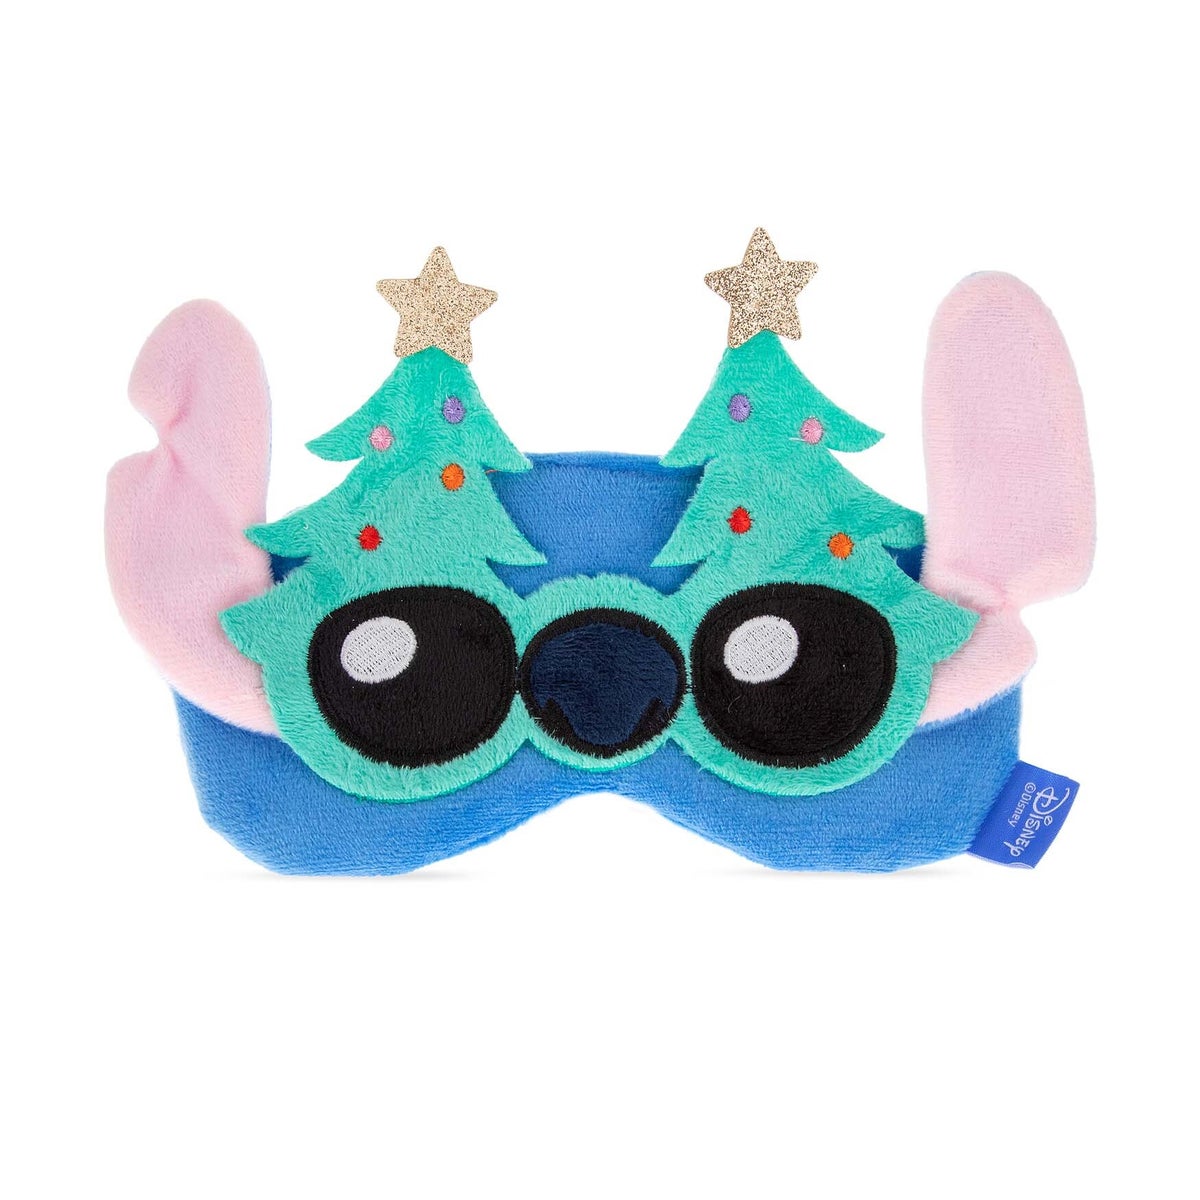 Disney Stitch At Christmas - Sleep Mask